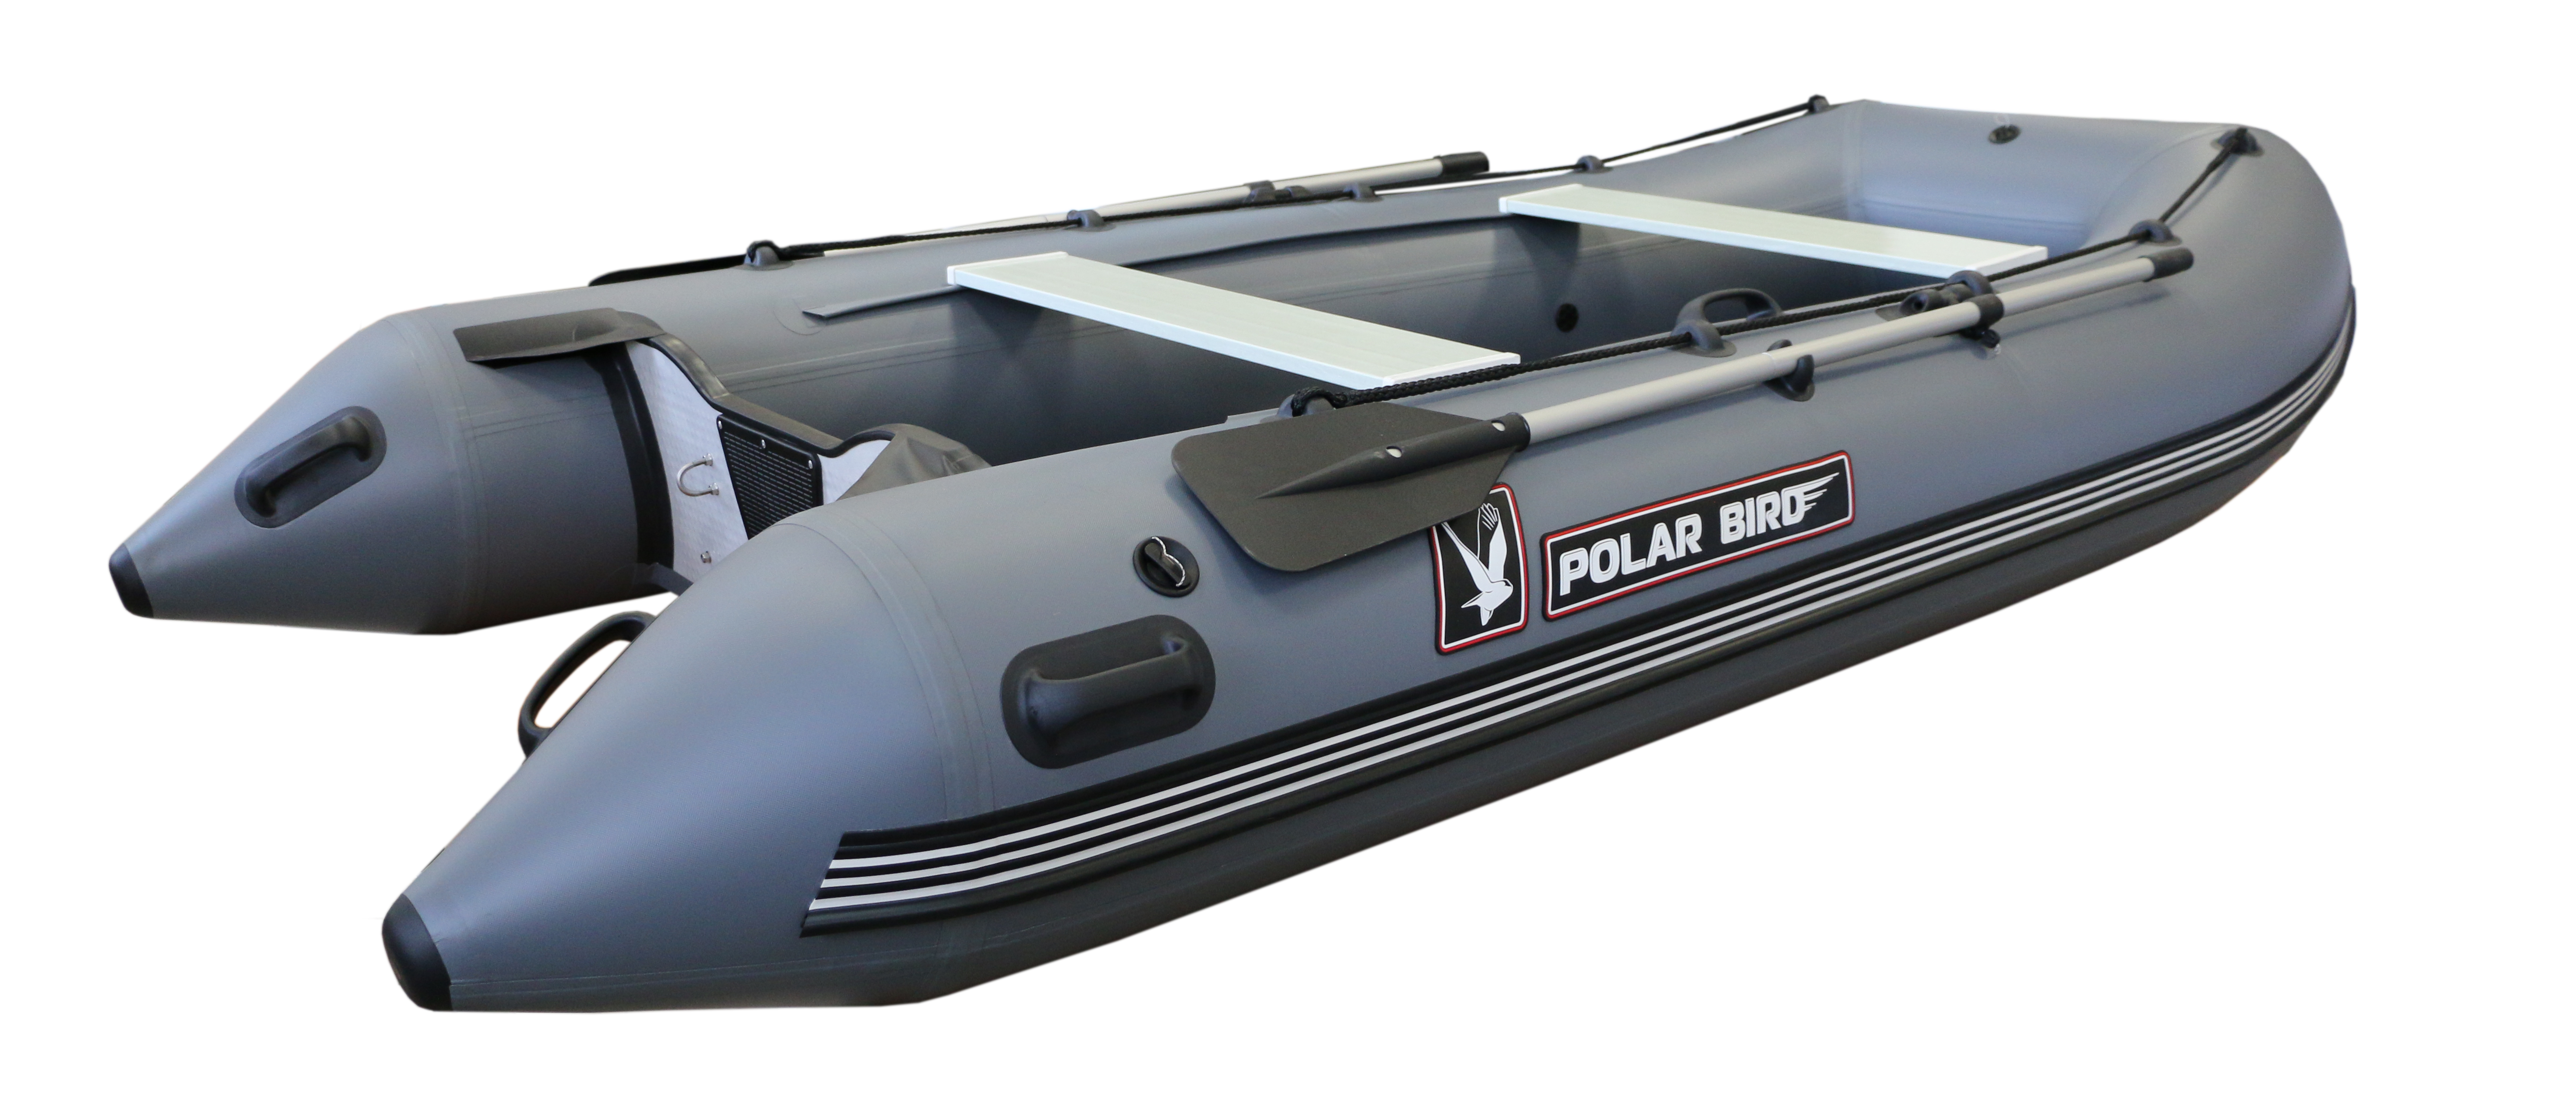 Лодки пвх polar. Лодка Polar Bird модель PB-400e Eagle. Лодка Polar Bird 400e New Eagle. Лодок ПВХ Полар Берд 400. Polar Bird 380e Eagle Орлан.